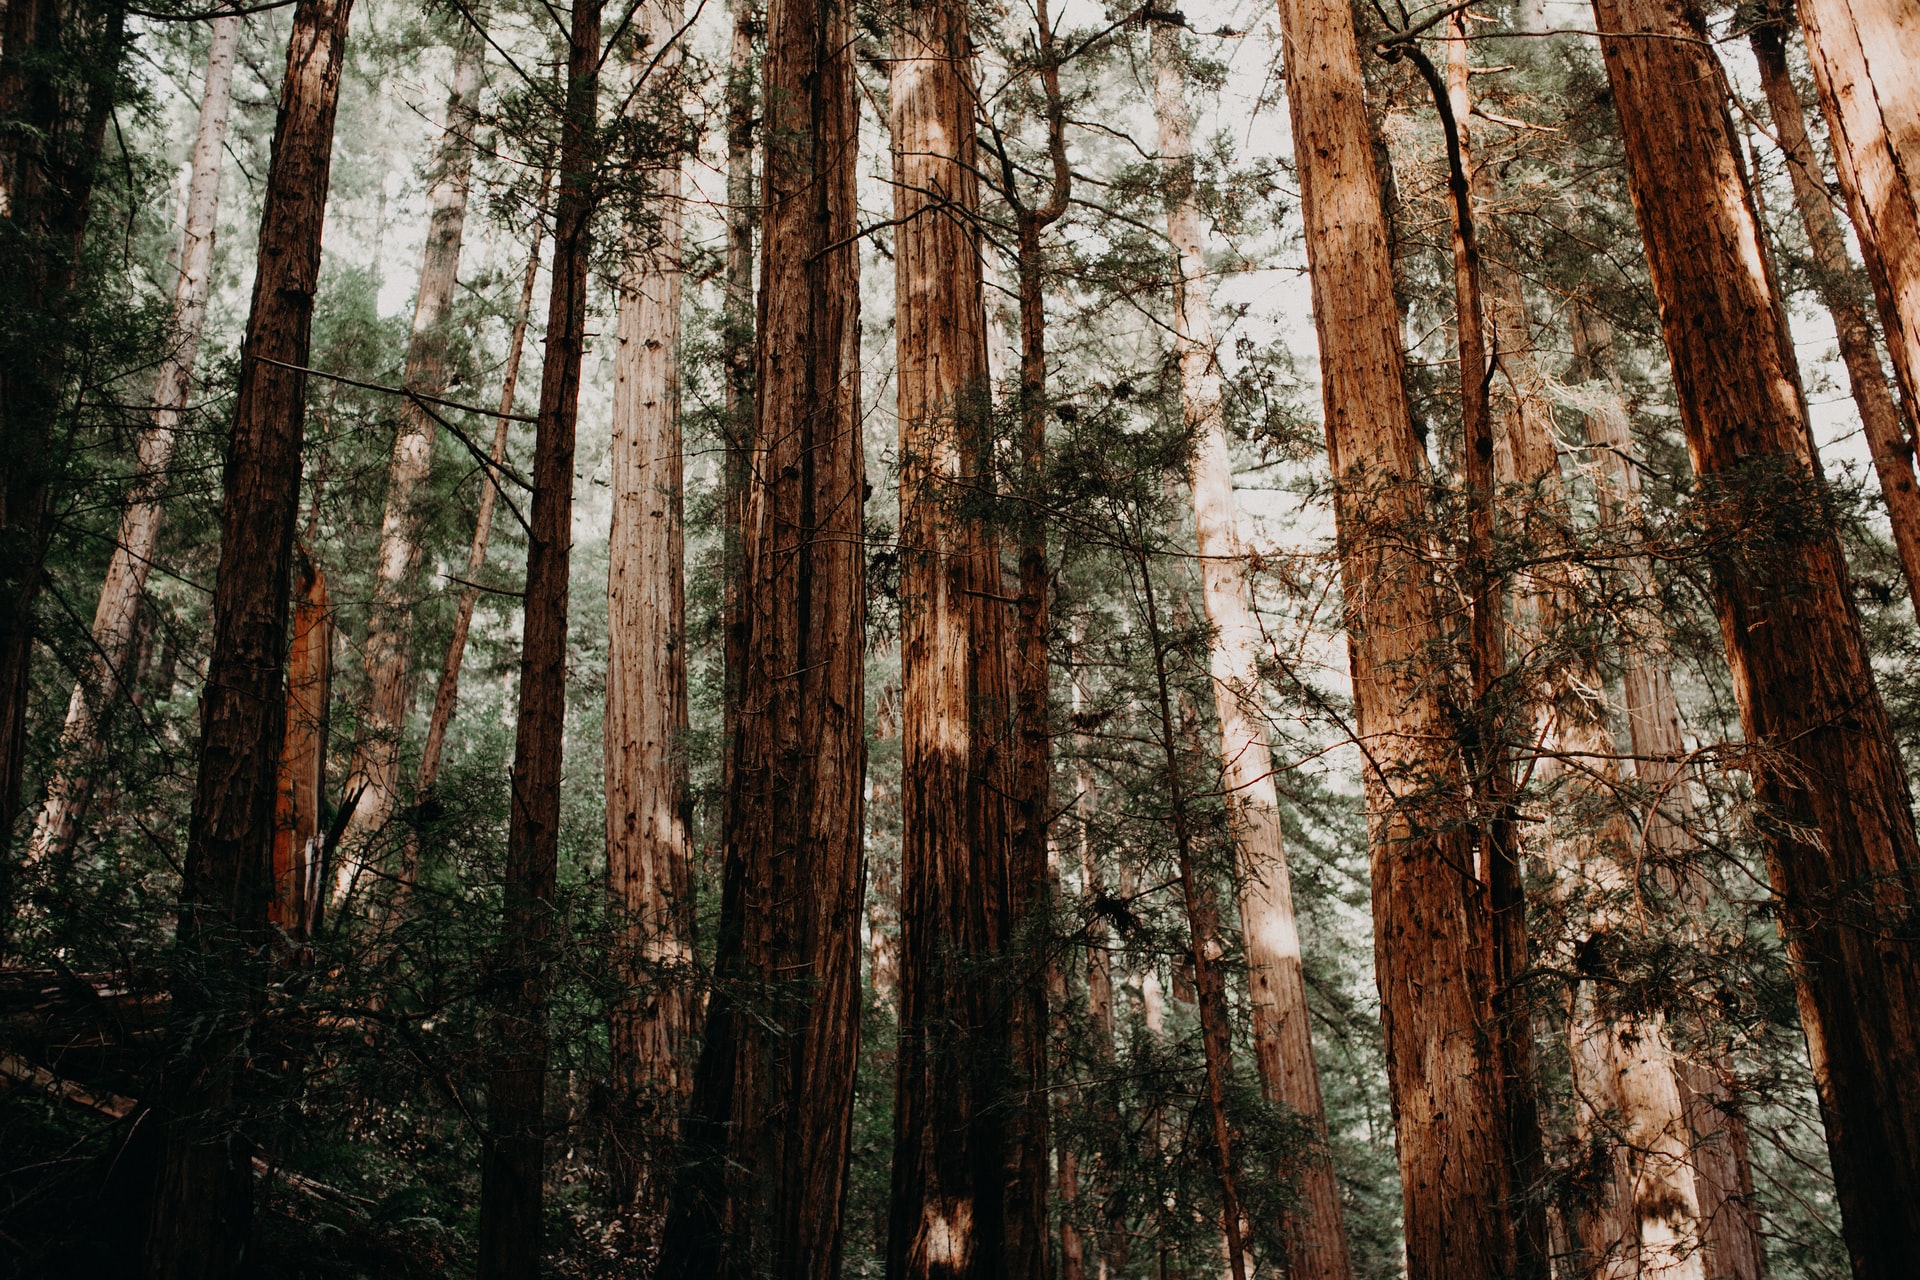 Redwoods at Muir Woods